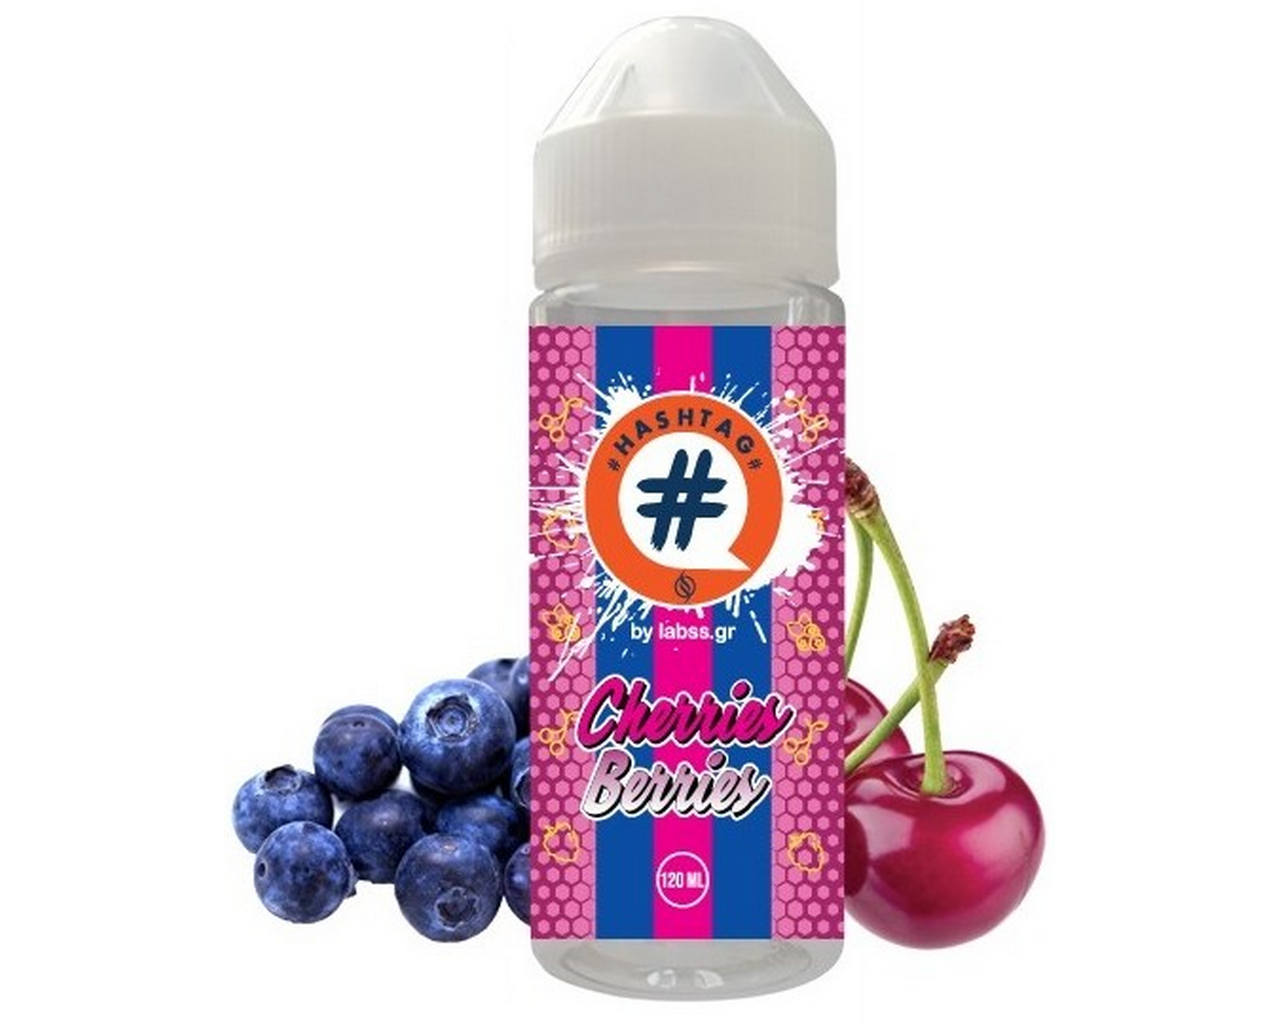 Hashtag Flavorshot Cherries Berries 24/120ml